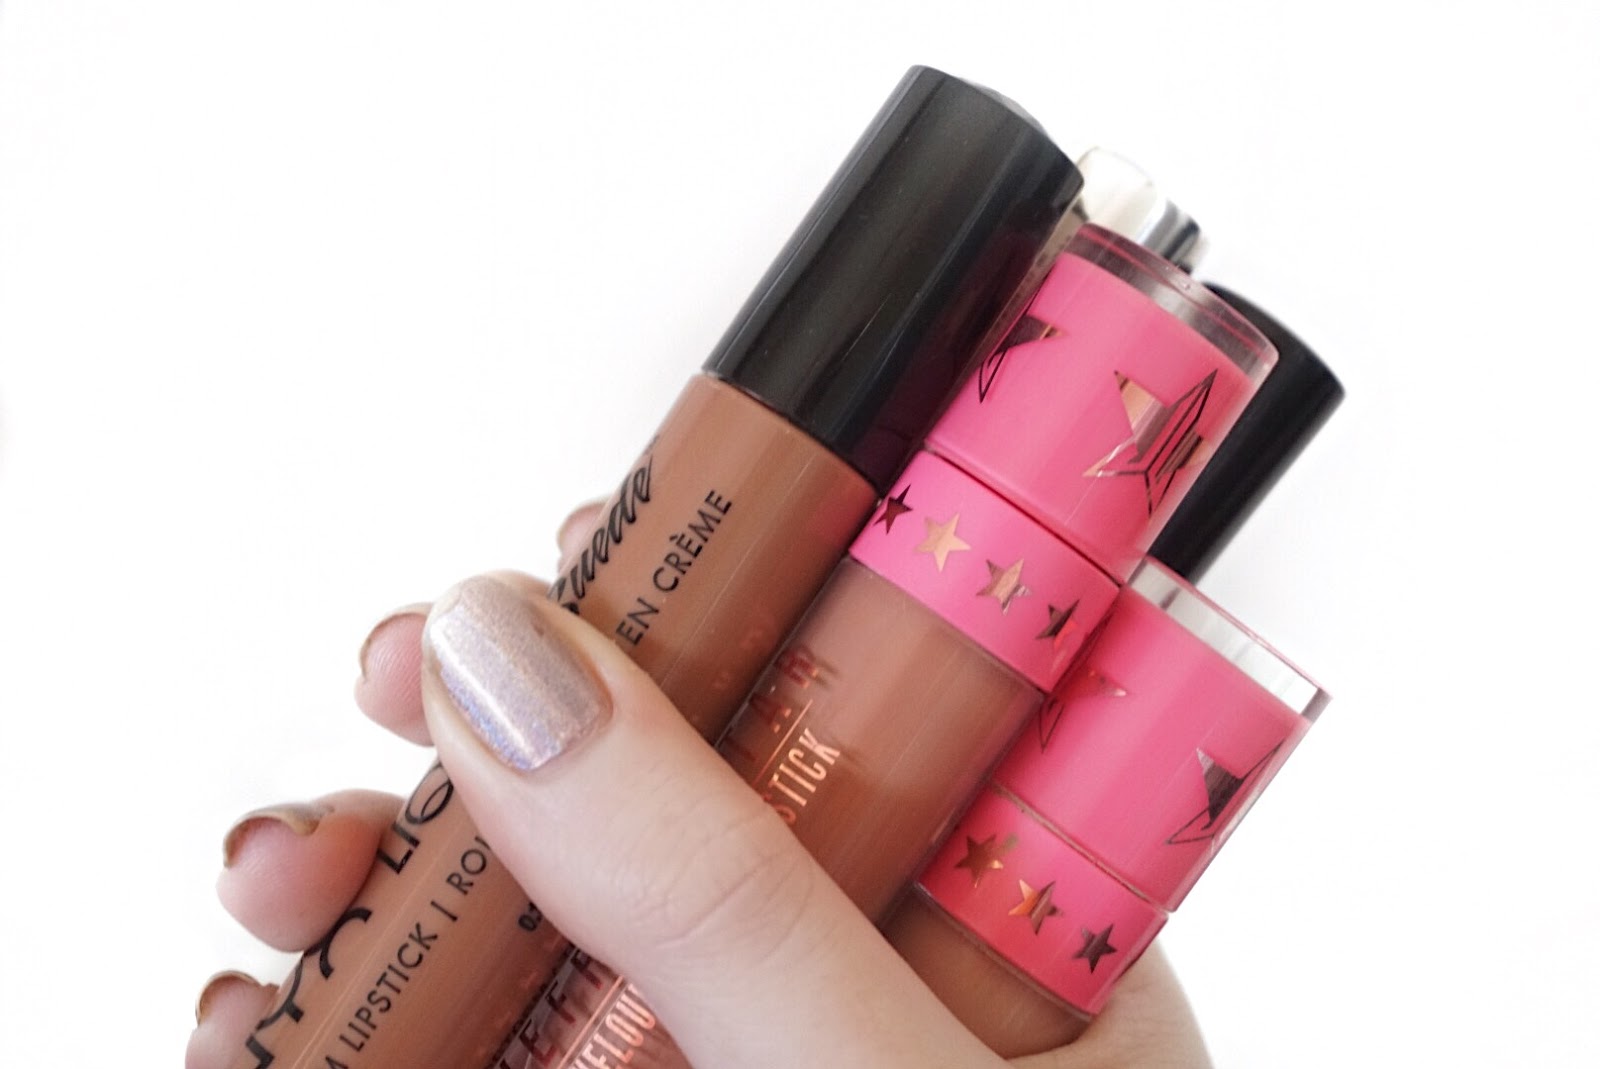 Top 5 Nude Liquid Lipsticks